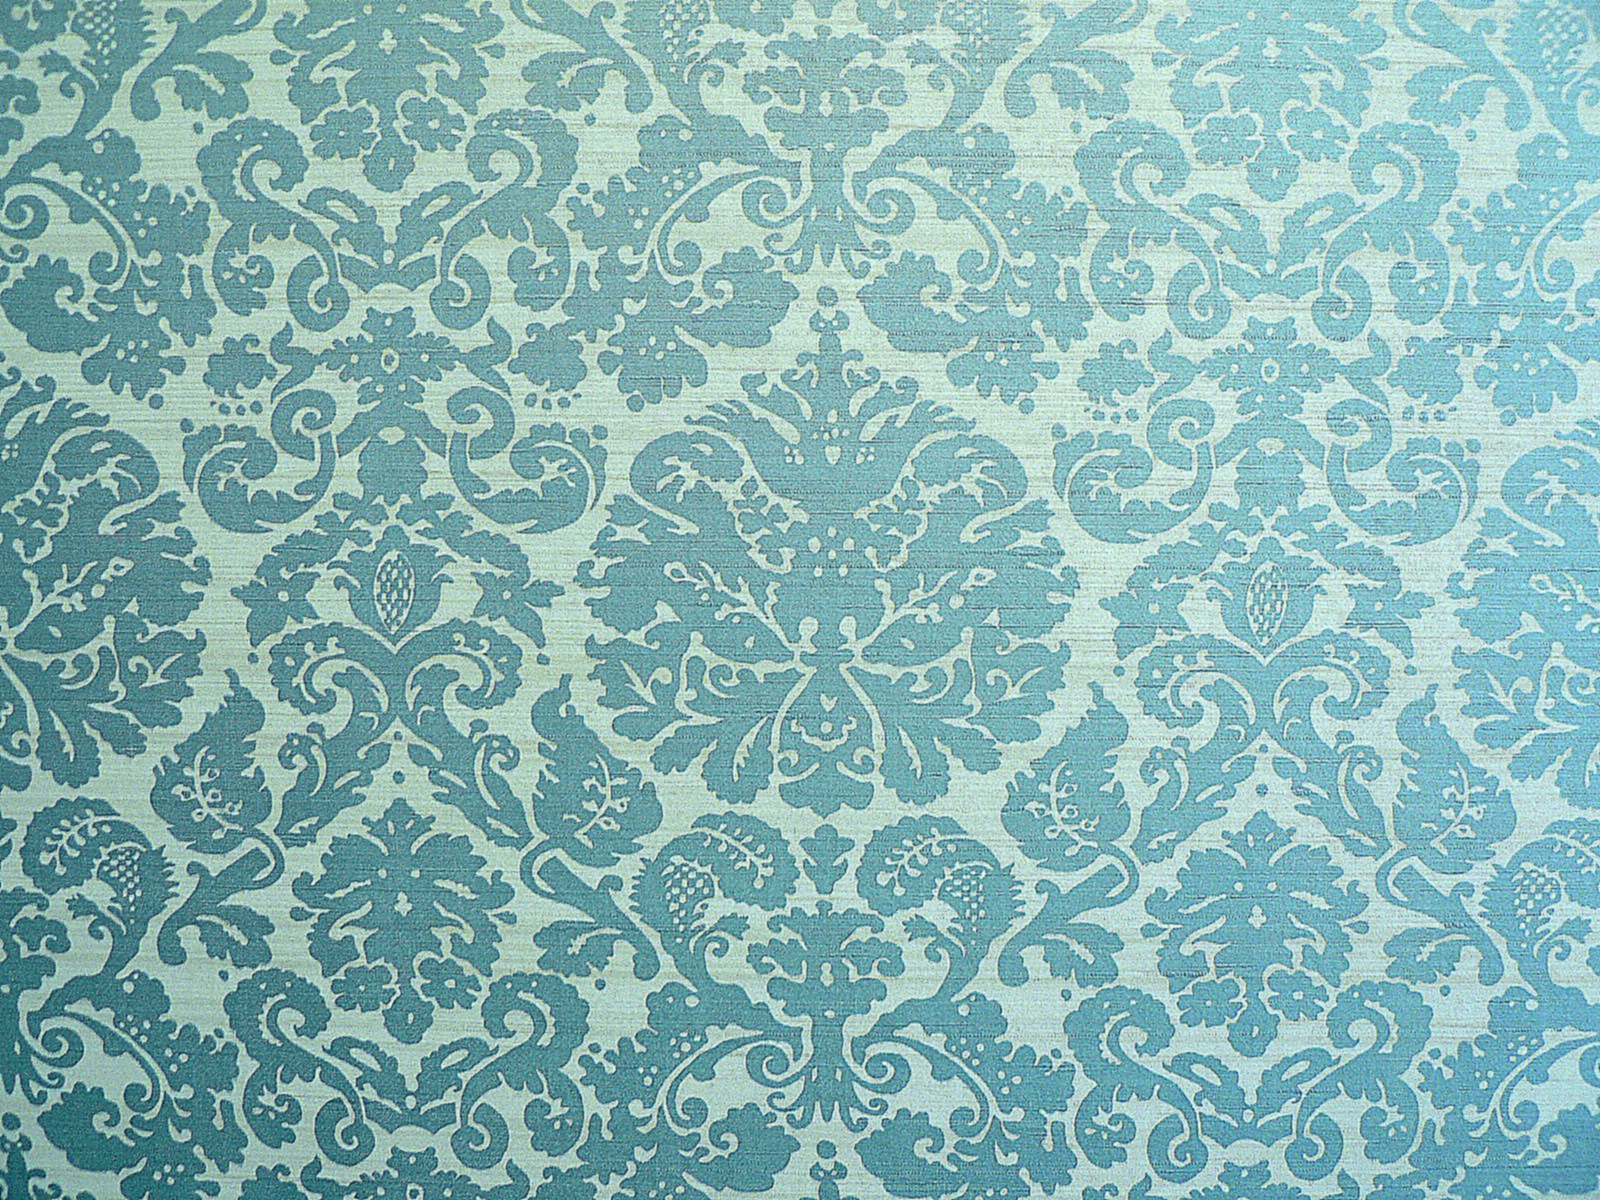 Wallpaper Patterns 1950s - Vintage Patterns - HD Wallpaper 